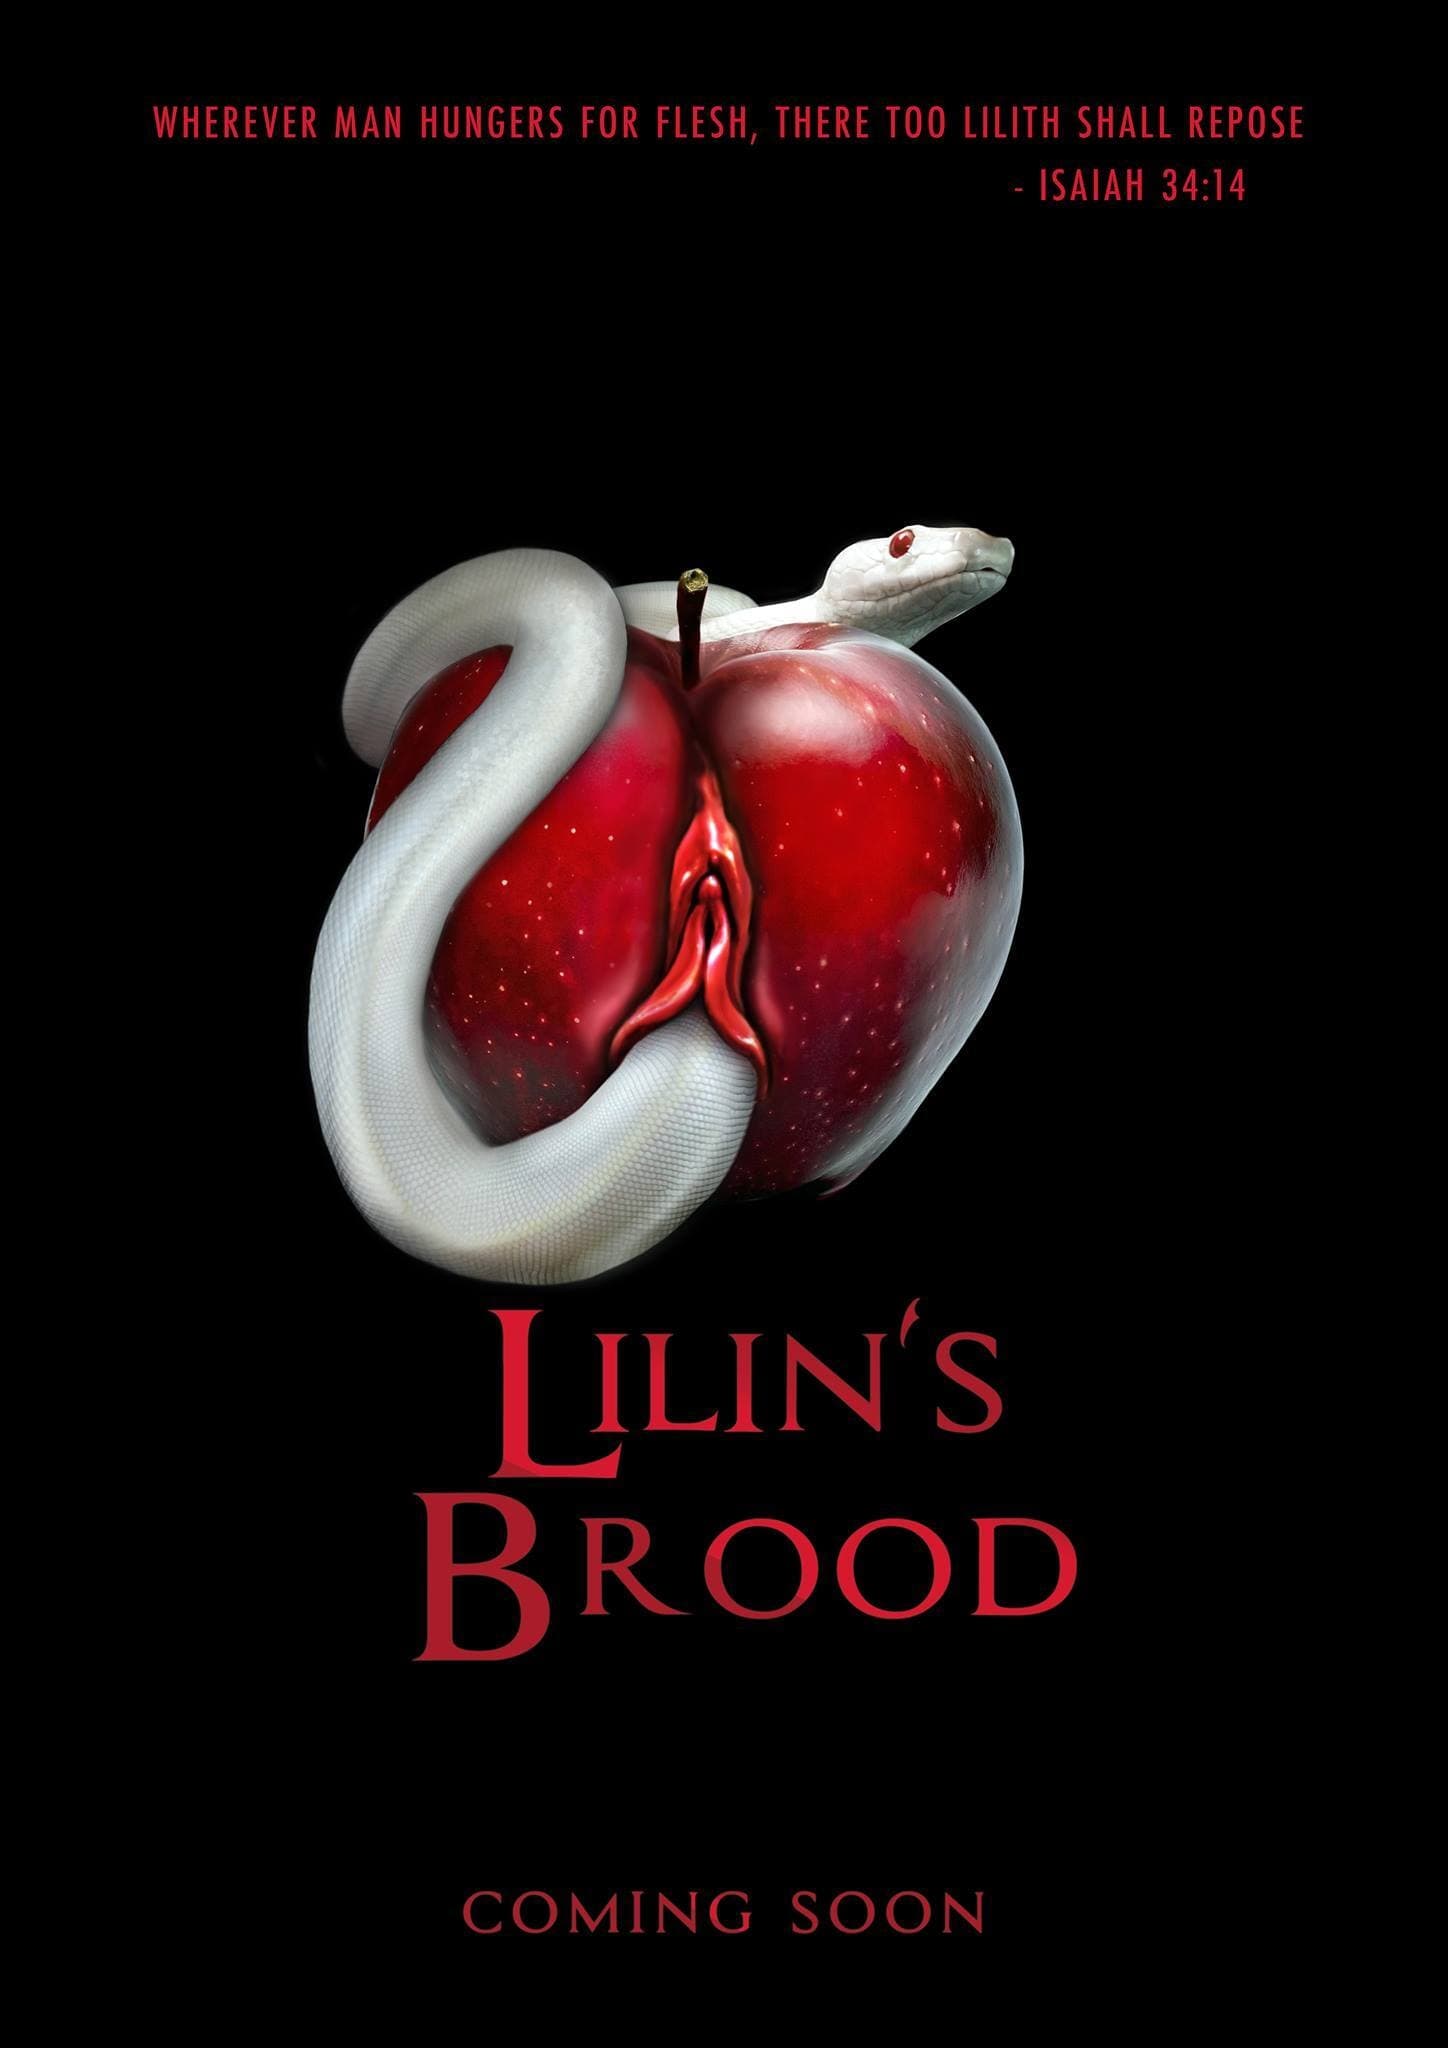 Lilin's Brood film